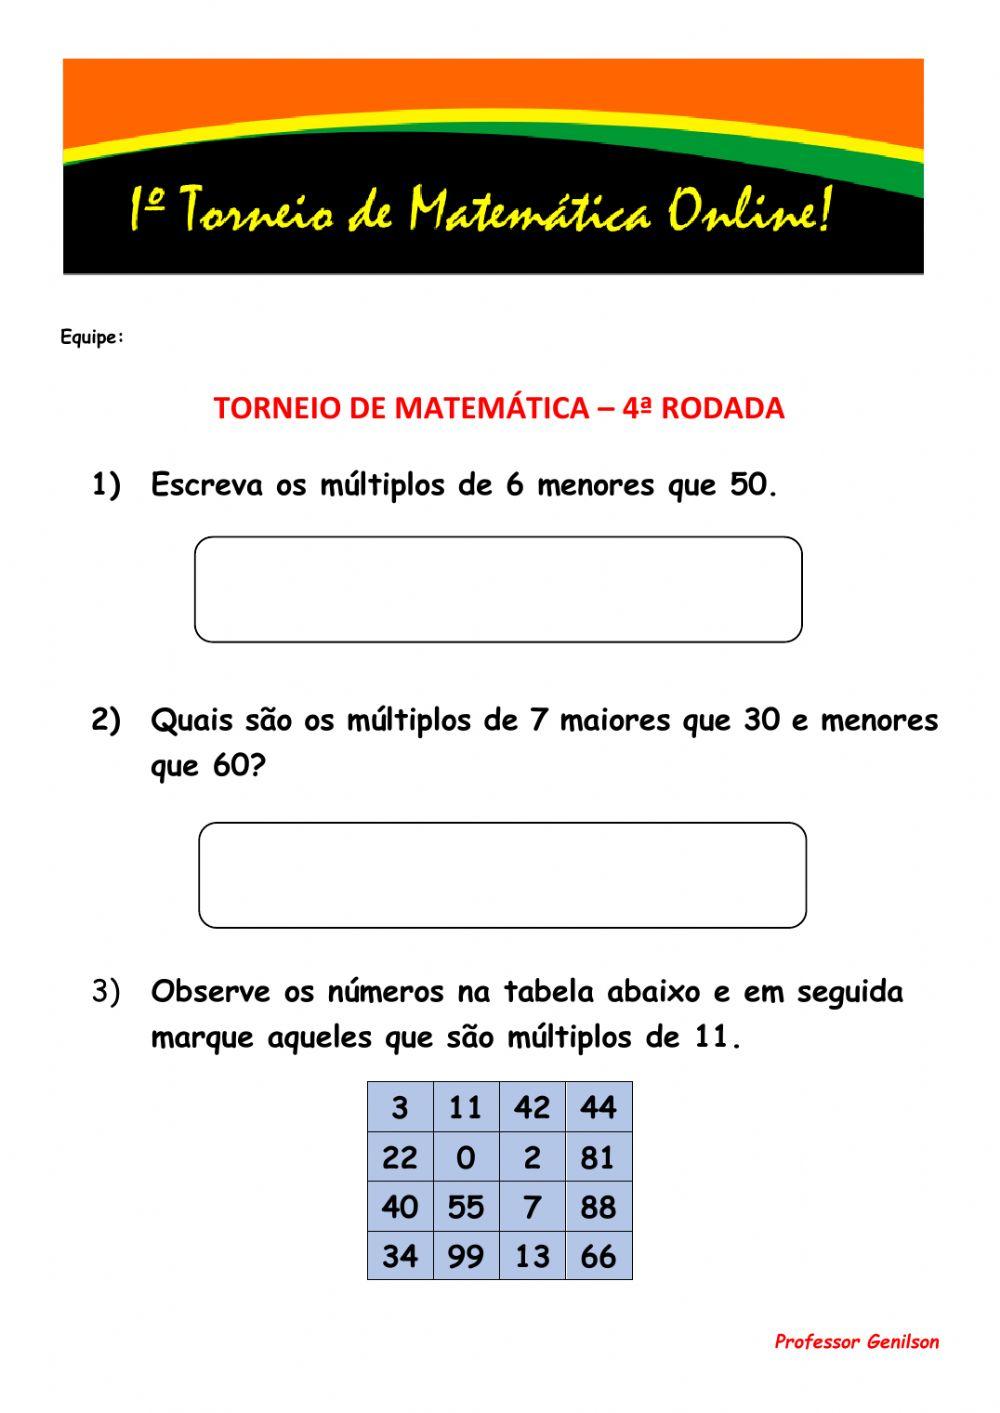 Torneio de matemática - 4ª rodada